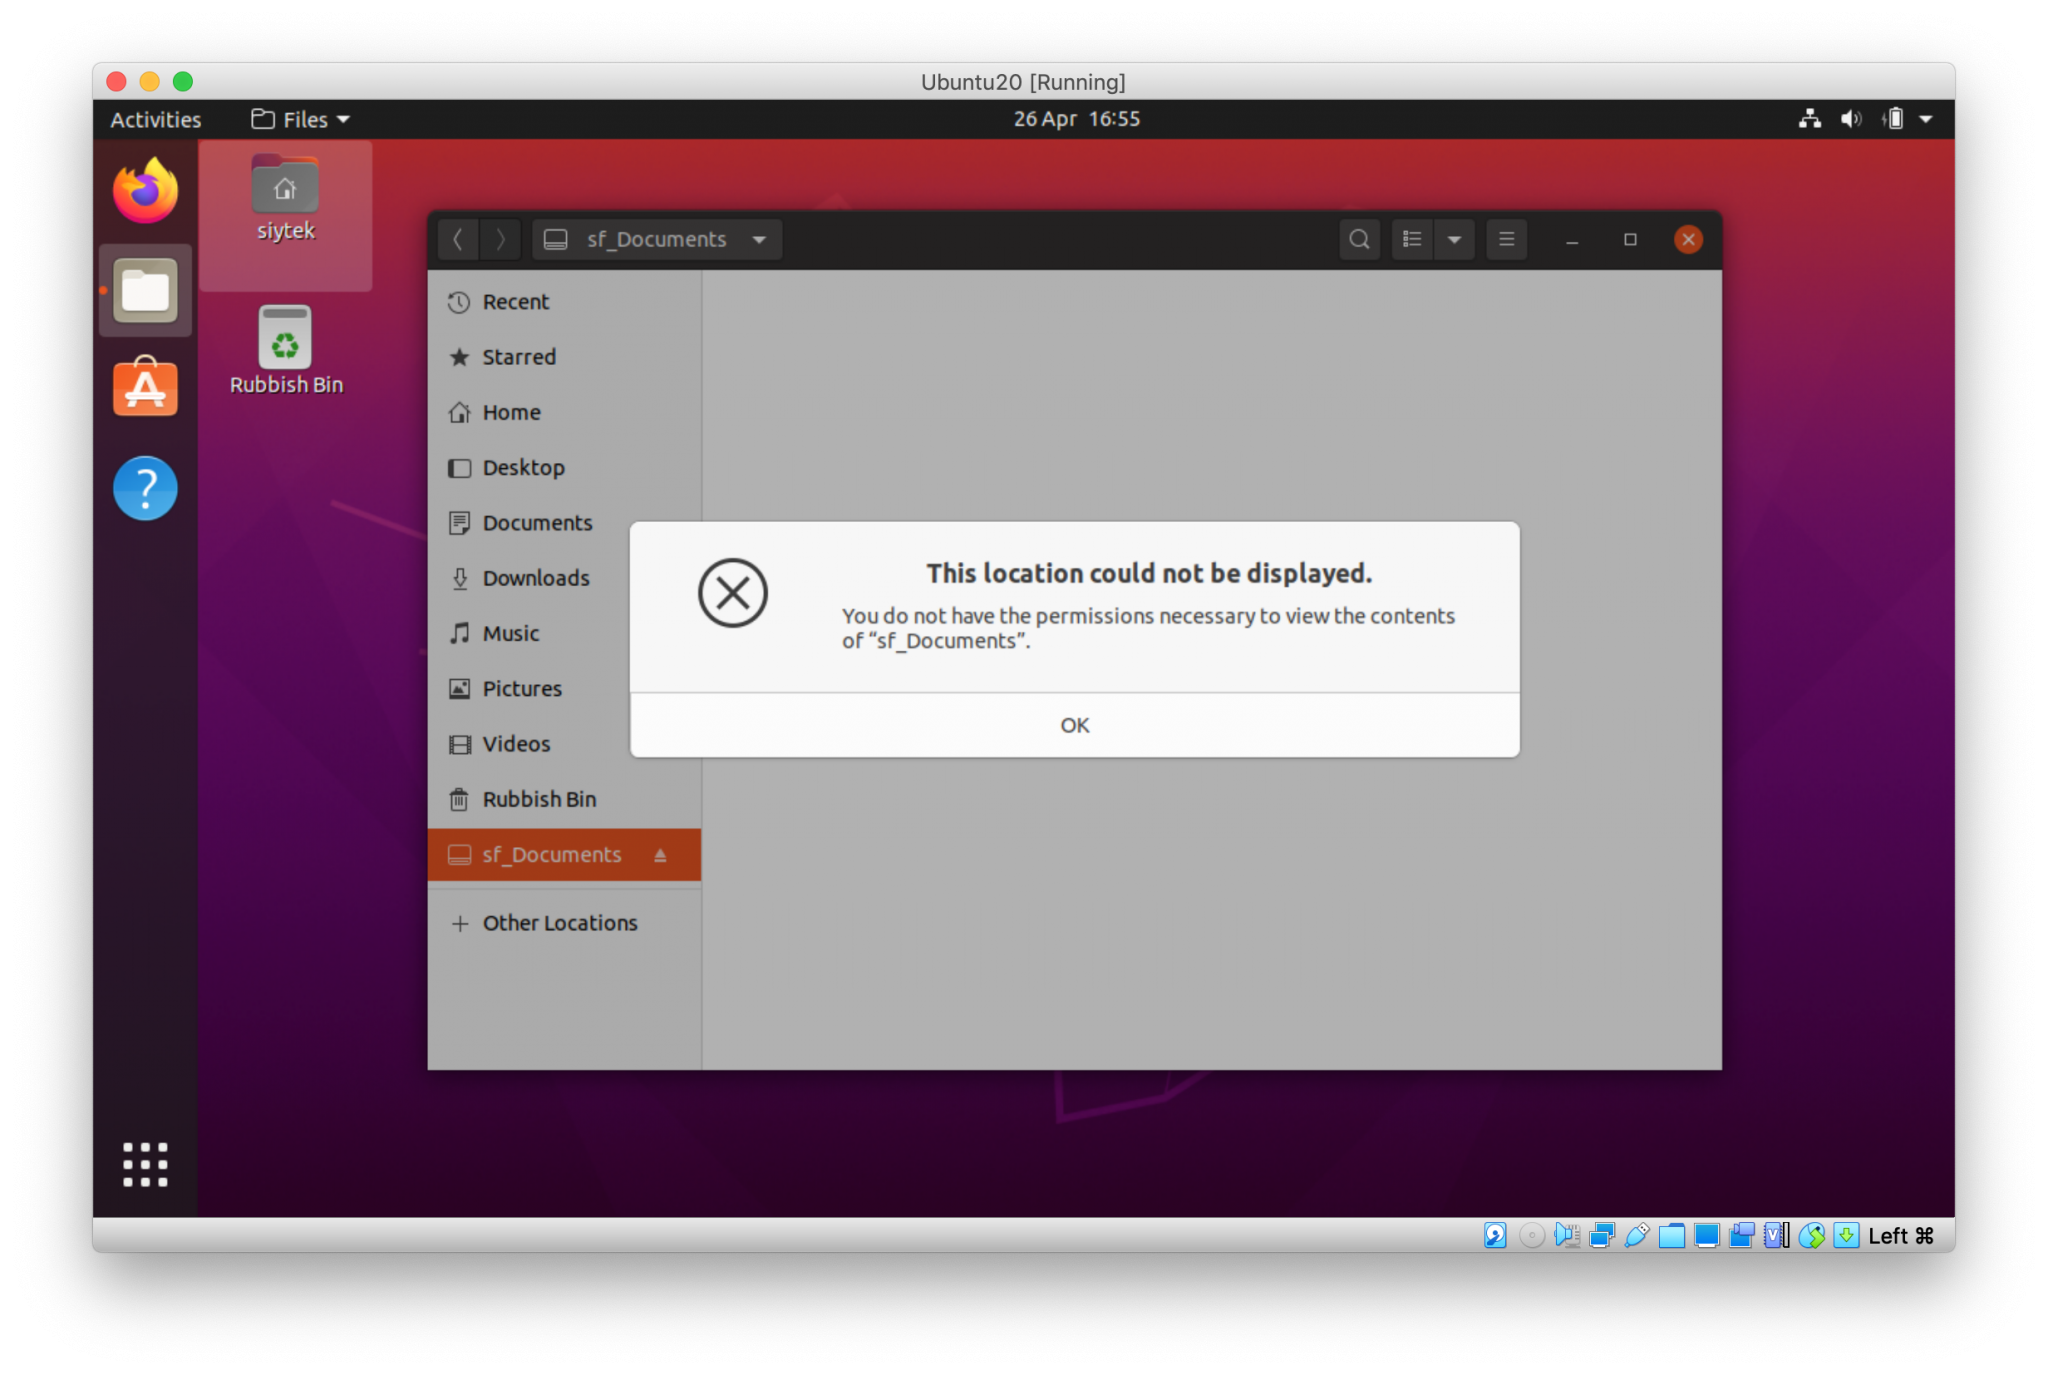 install ubuntu virtualbox mac